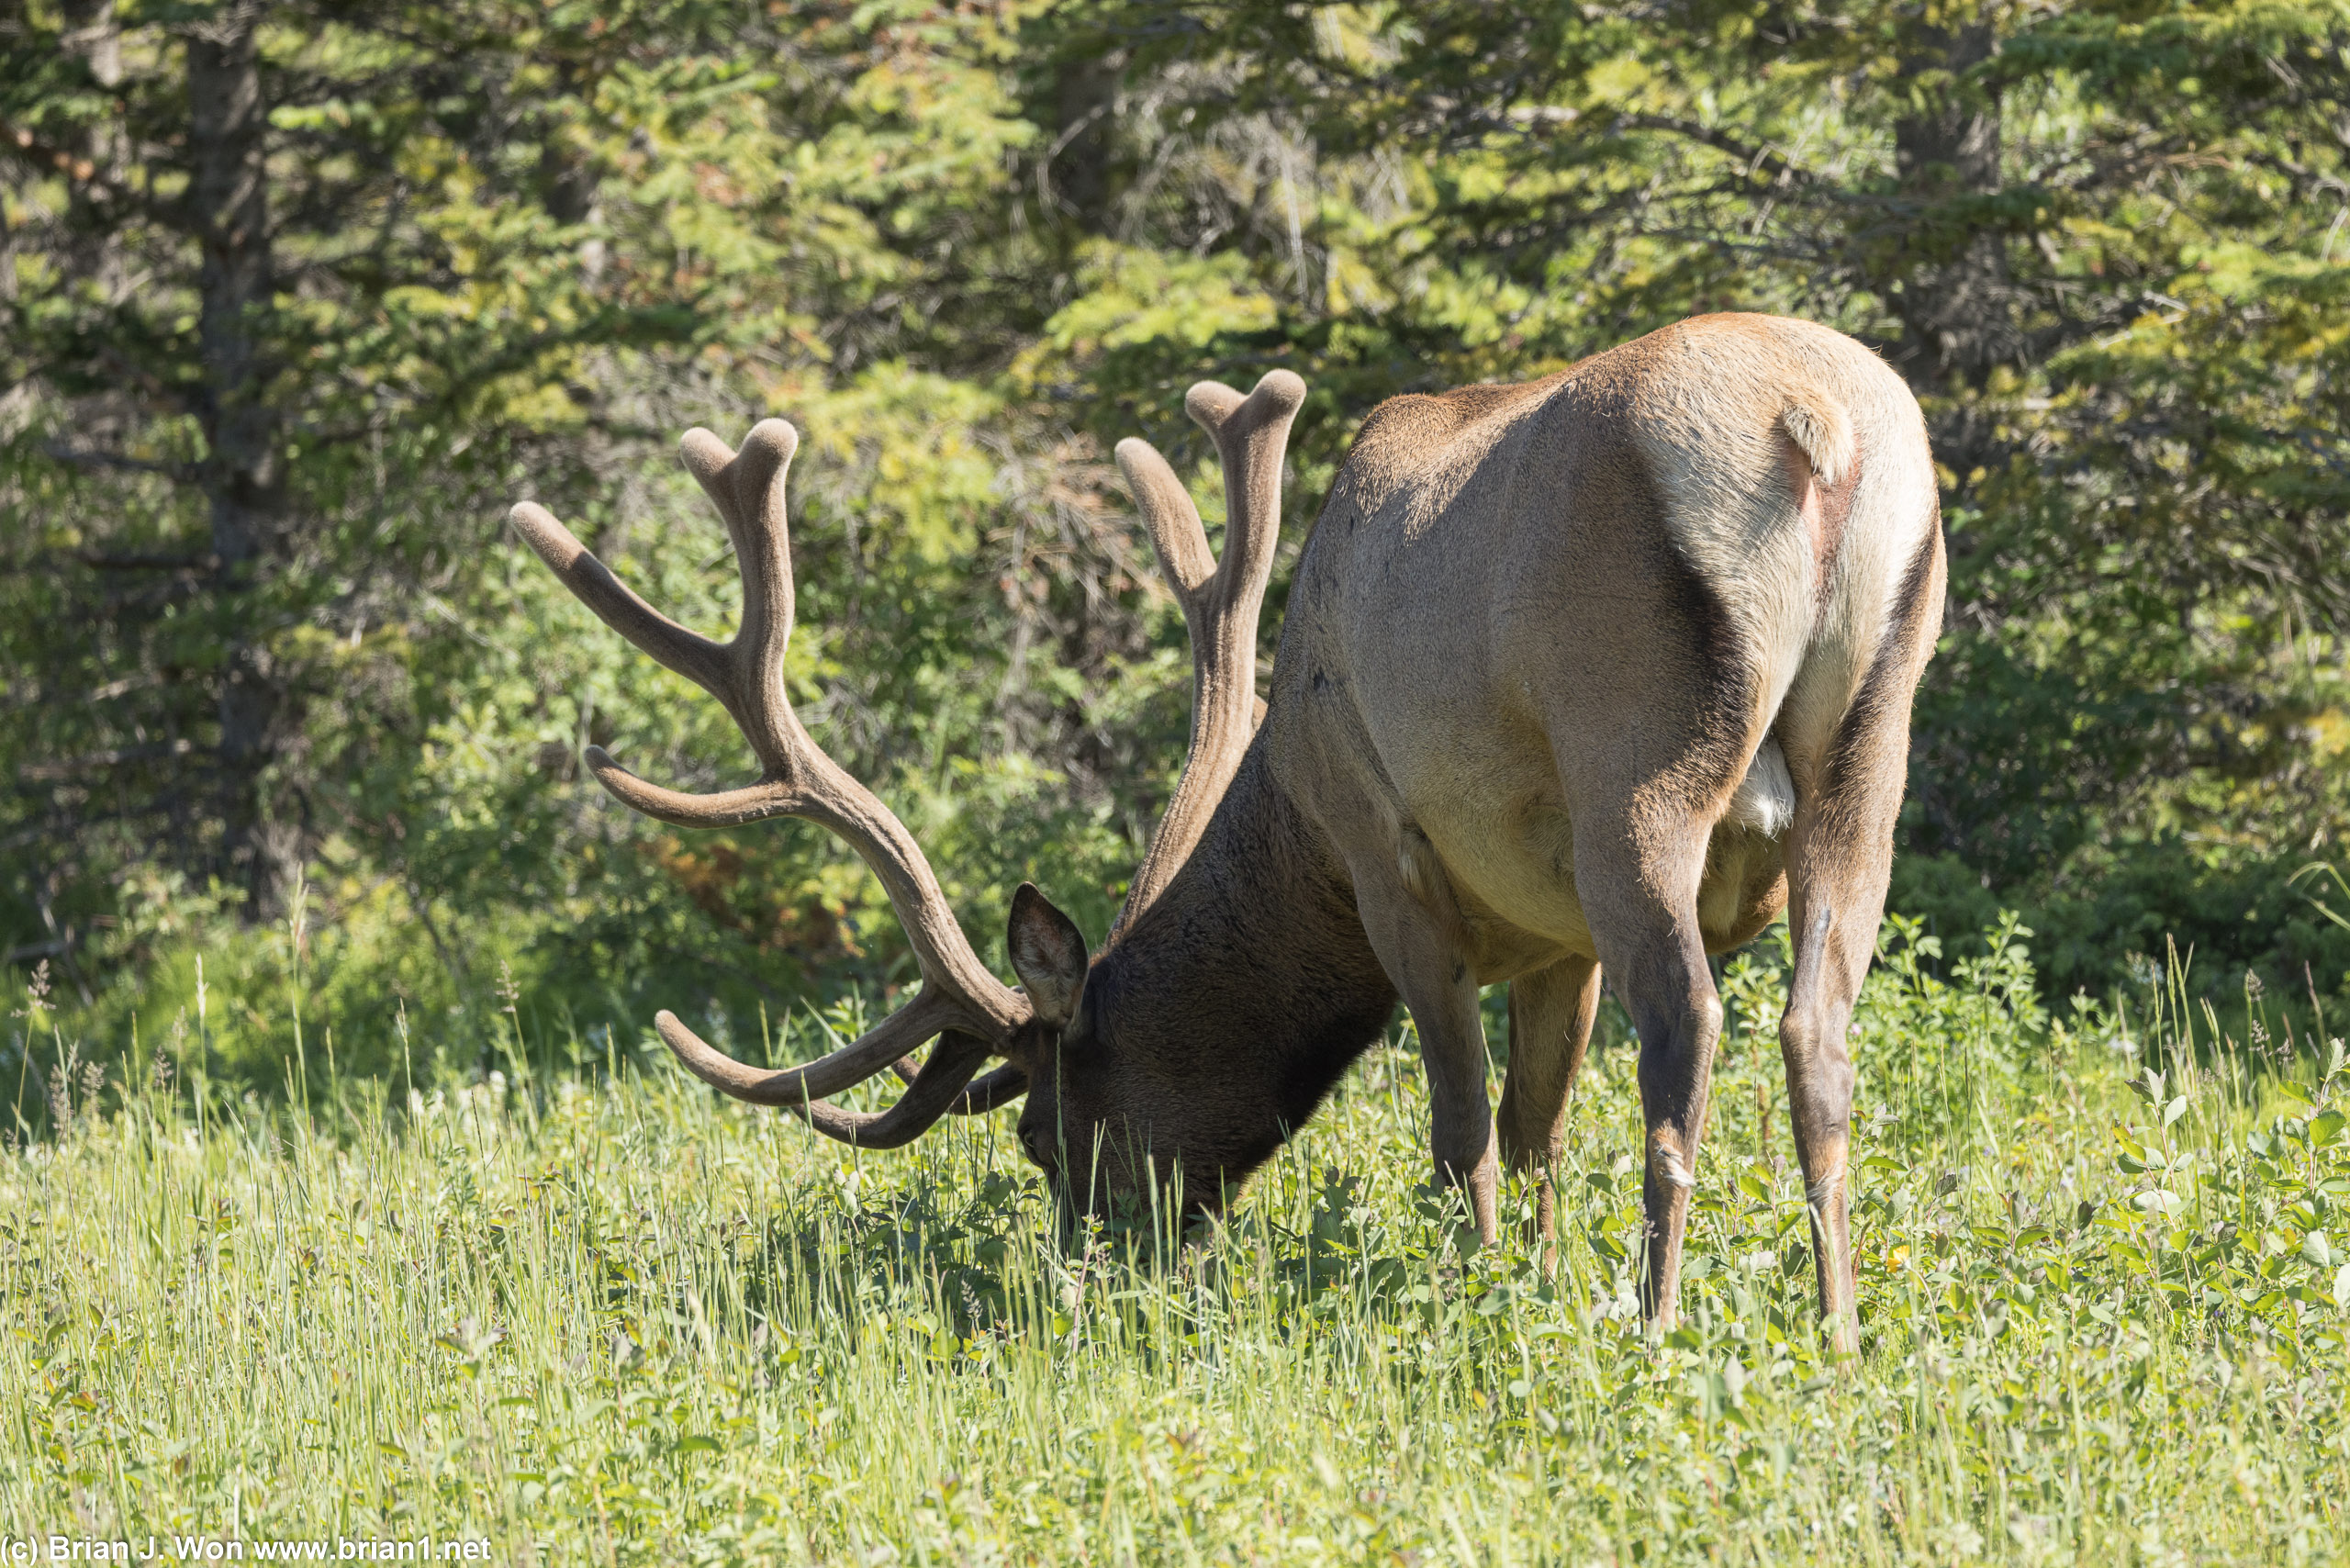 Just leaving Jasper National Park, spotted a magnificent elk.